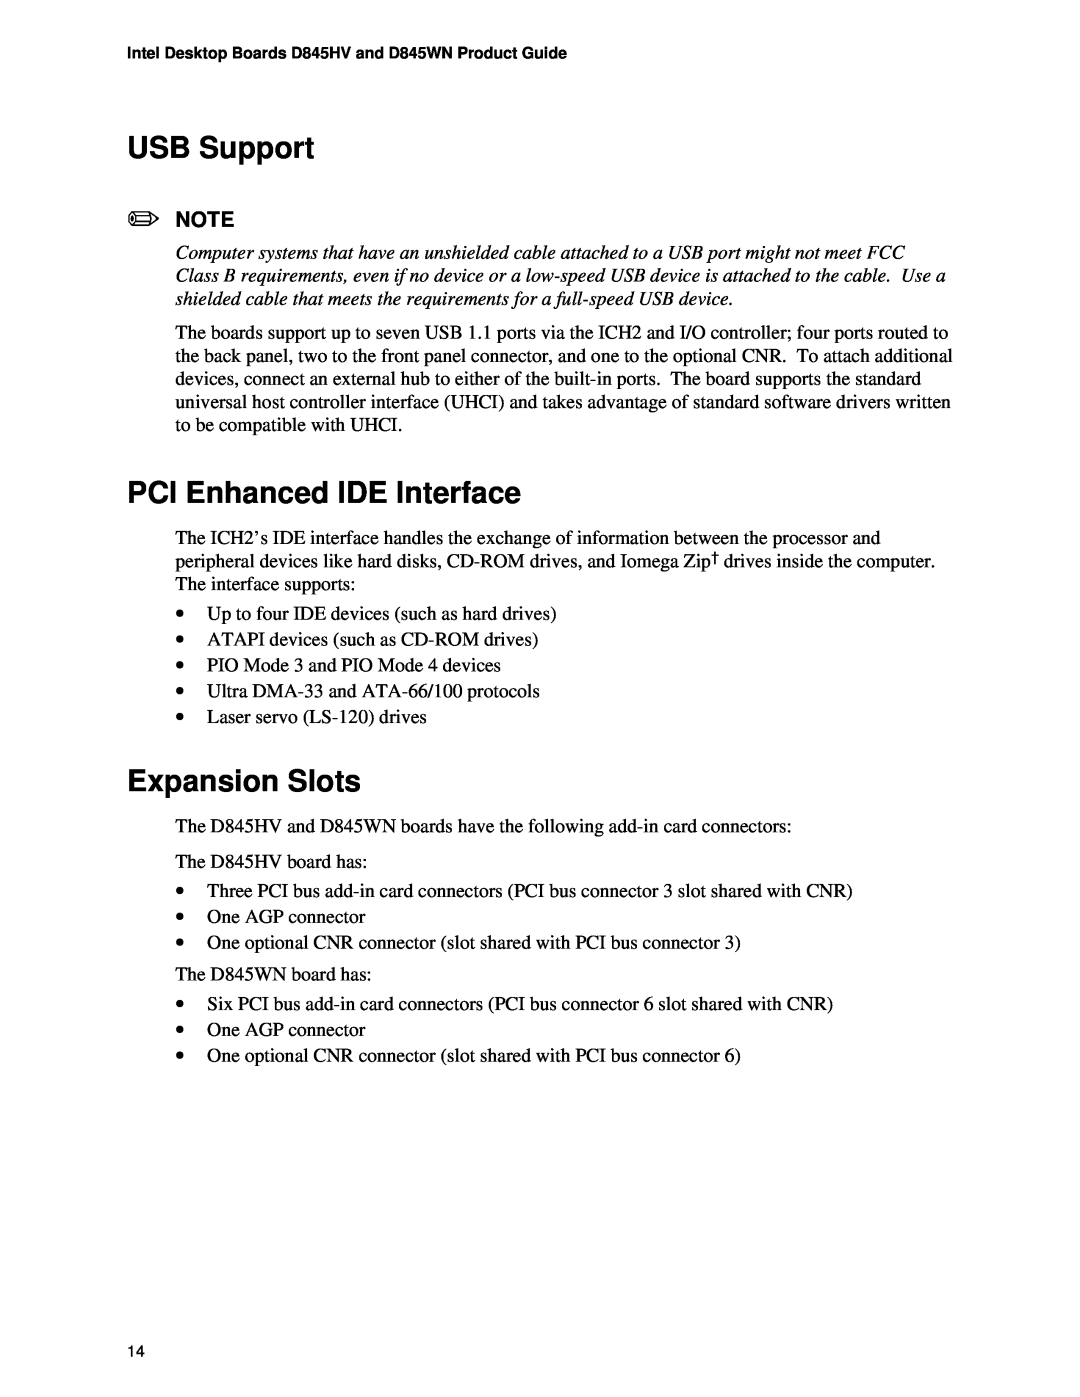 Intel D845WN, D845HV manual USB Support, PCI Enhanced IDE Interface, Expansion Slots 